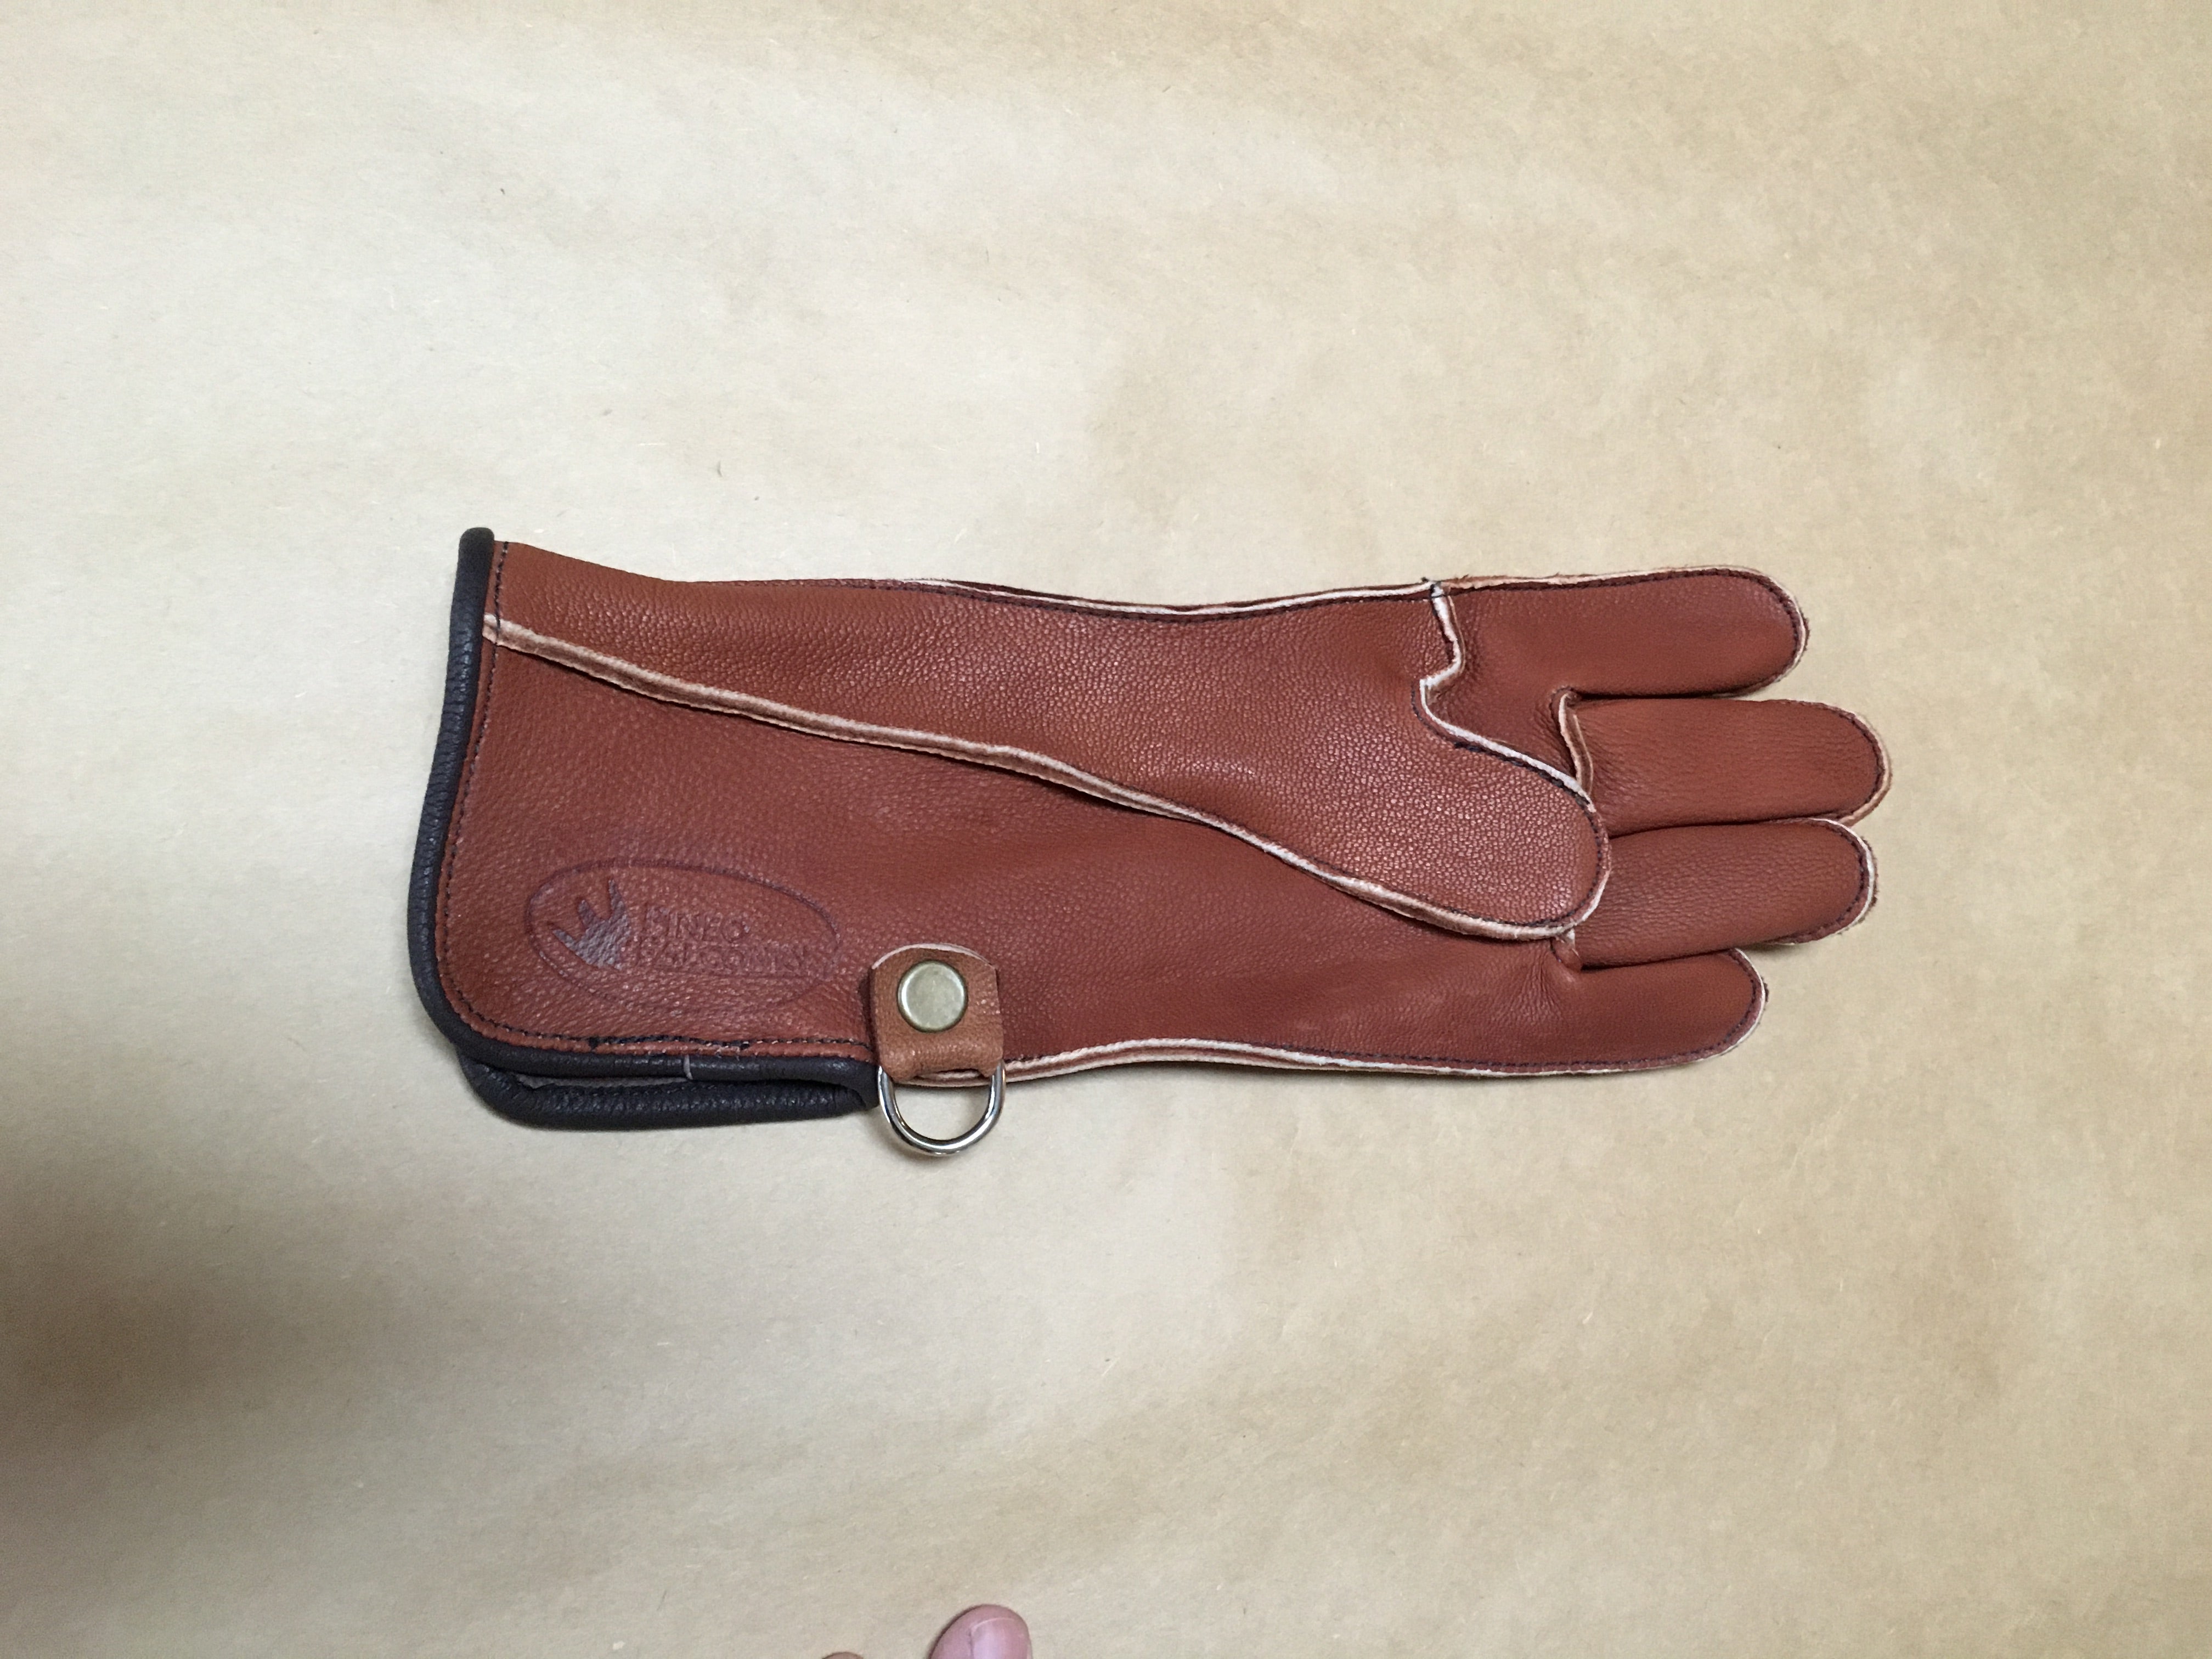 Pendleton Gloves